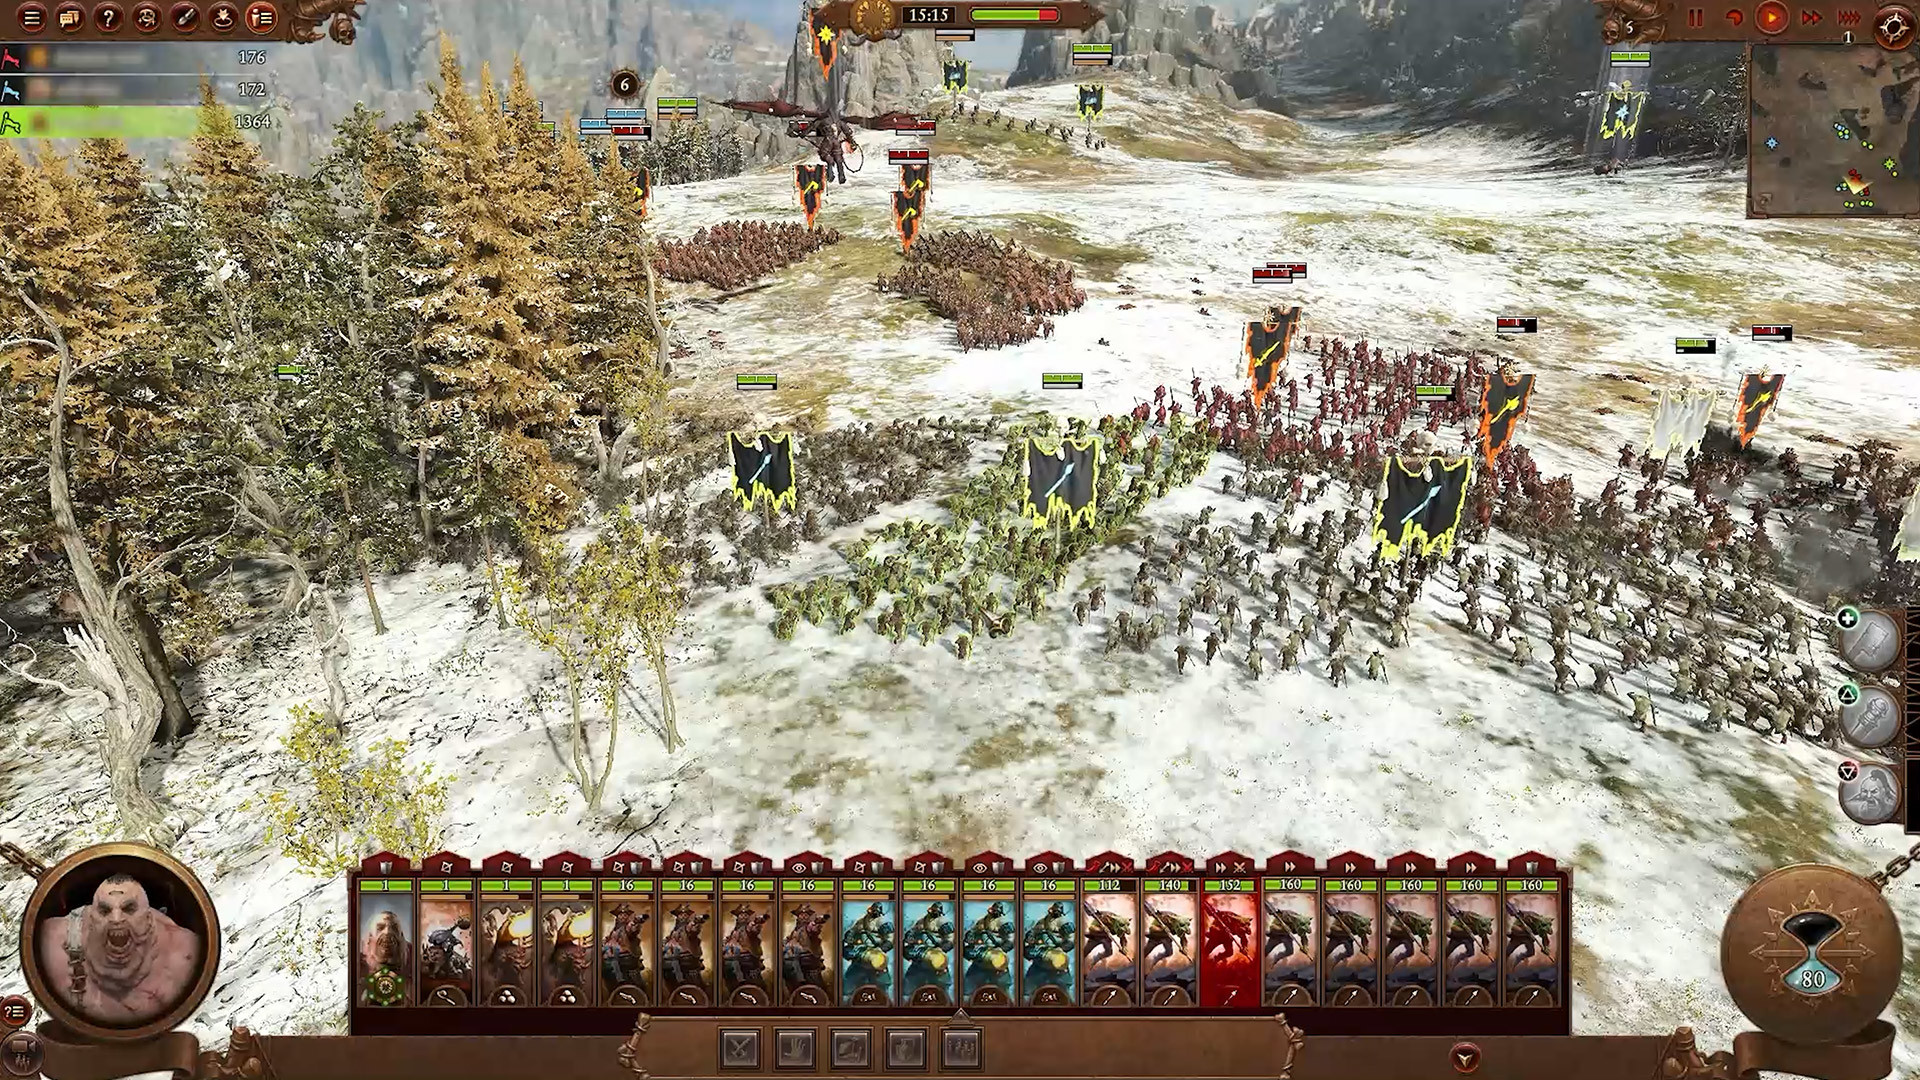 Total War: WARHAMMER III - Ogre Kingdoms DLC Steam CD Key